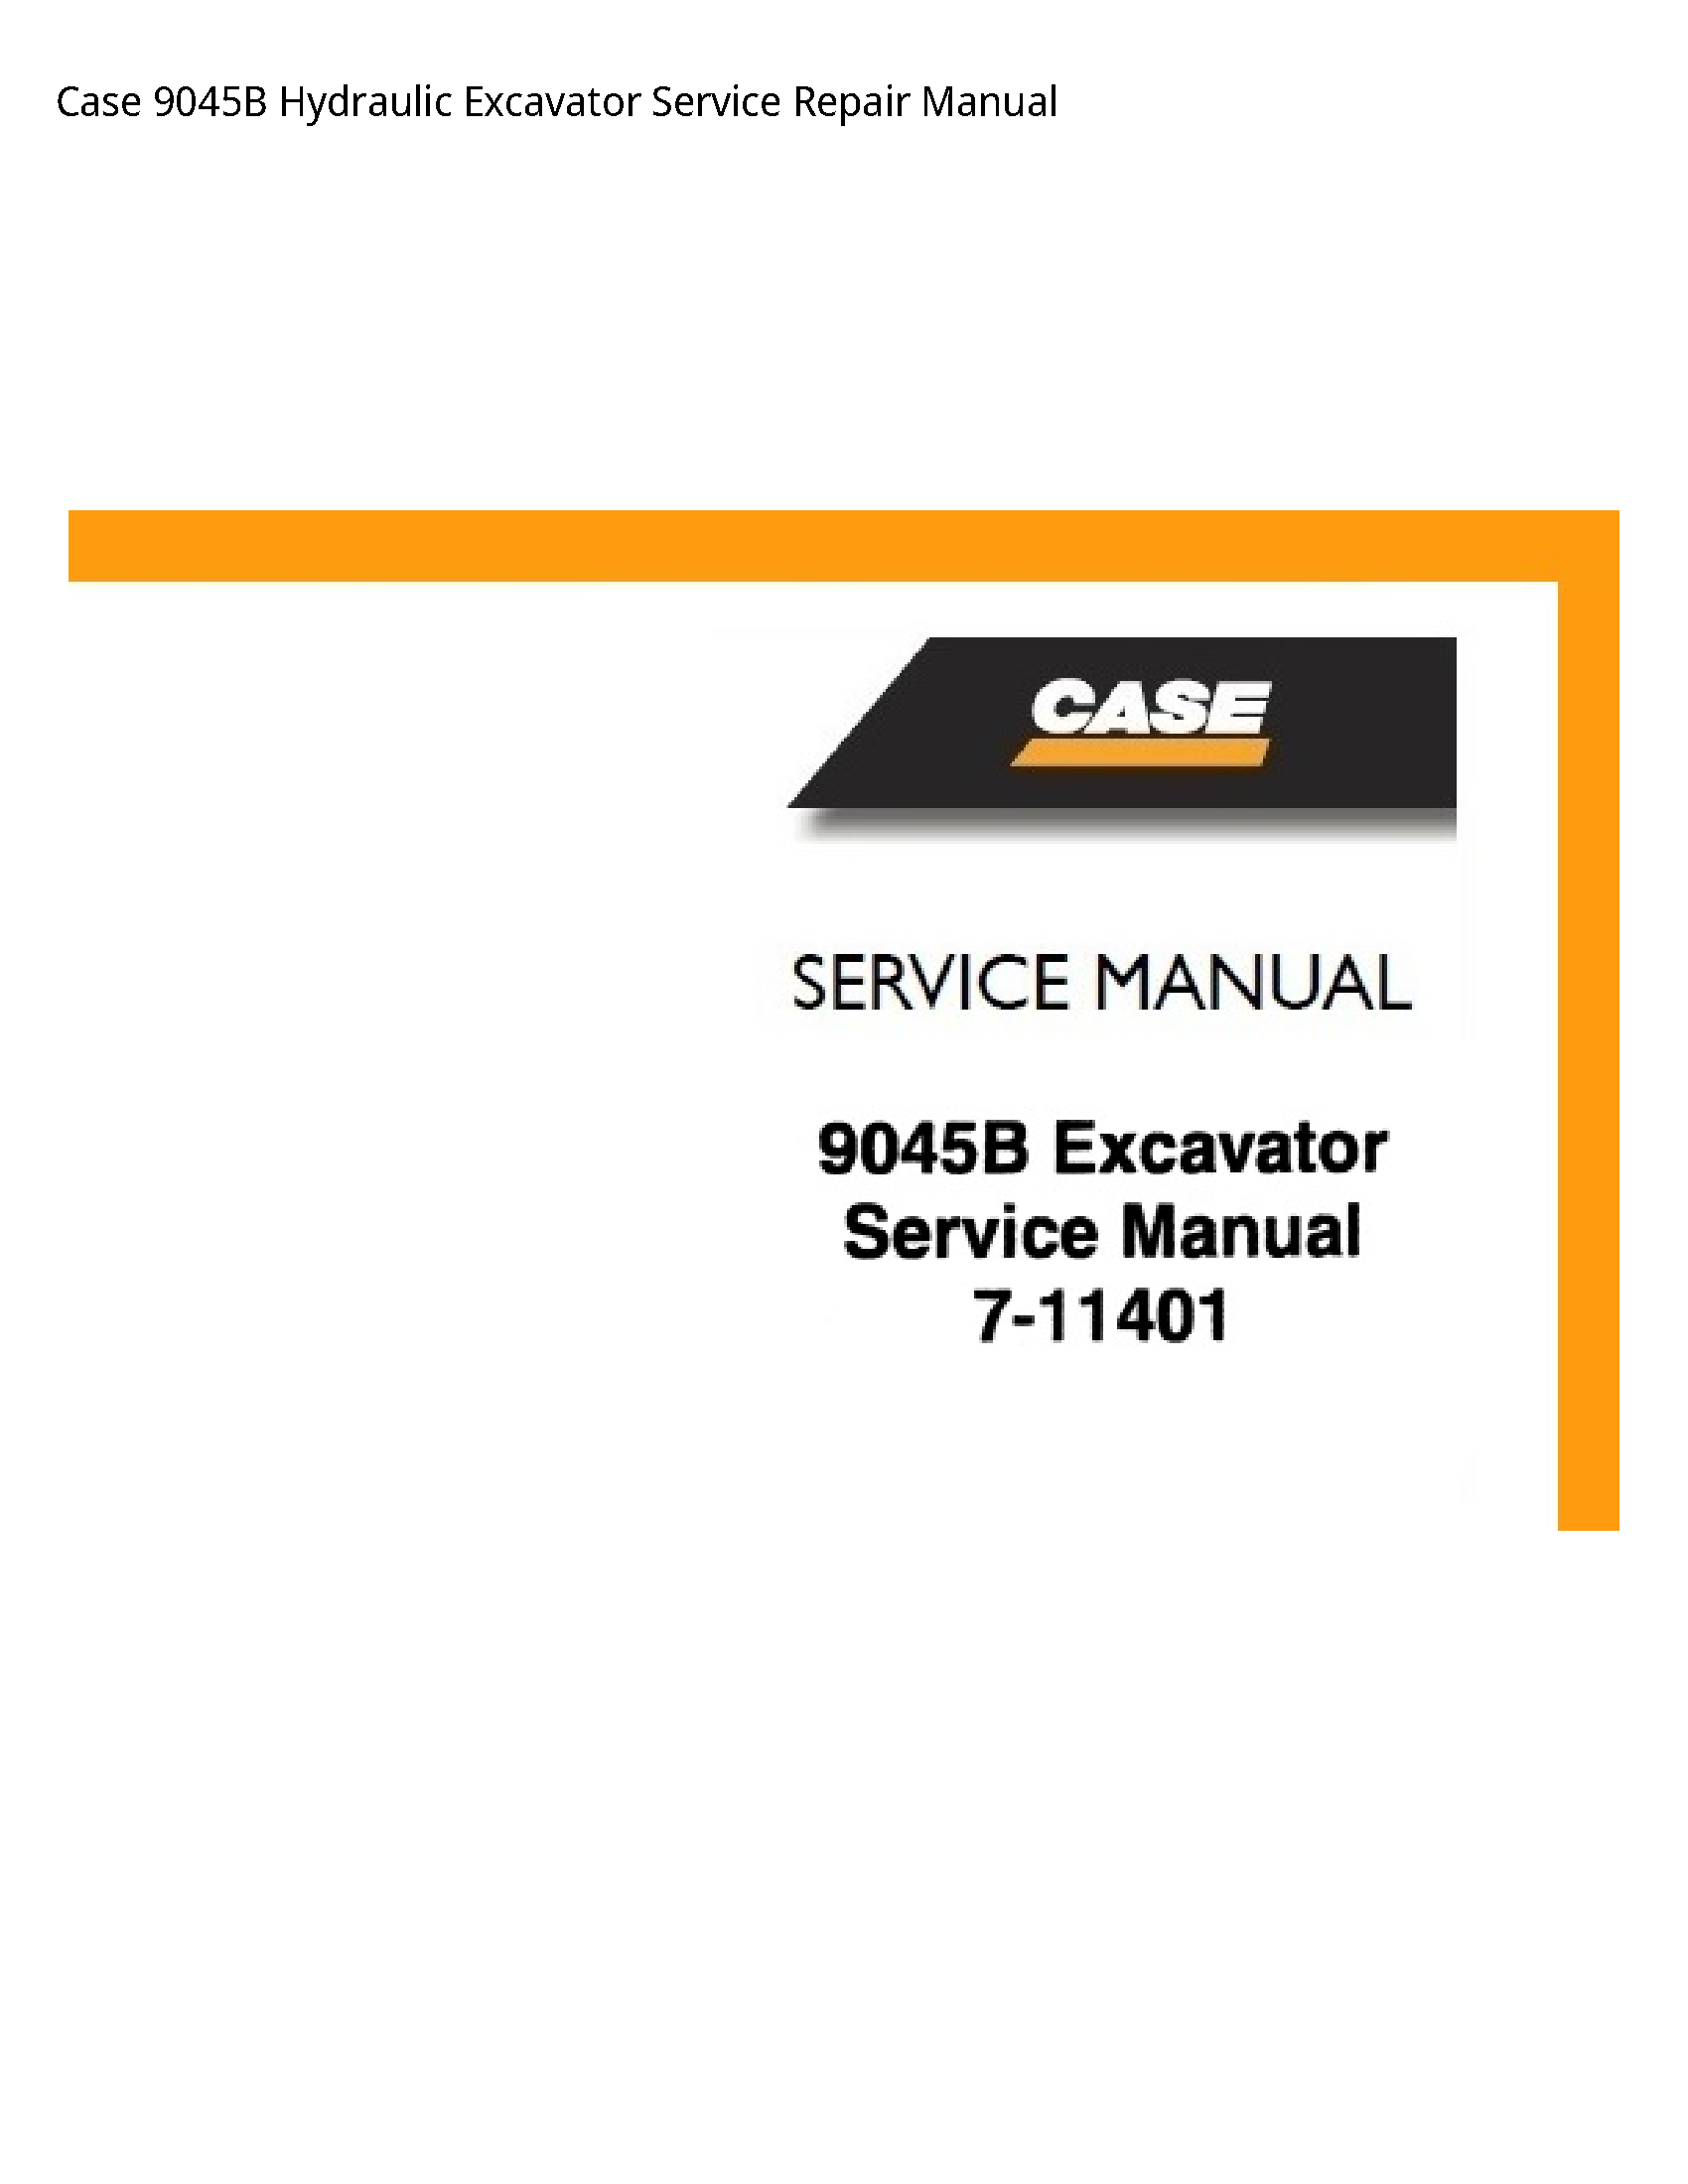 Case/Case IH 9045B Hydraulic Excavator manual